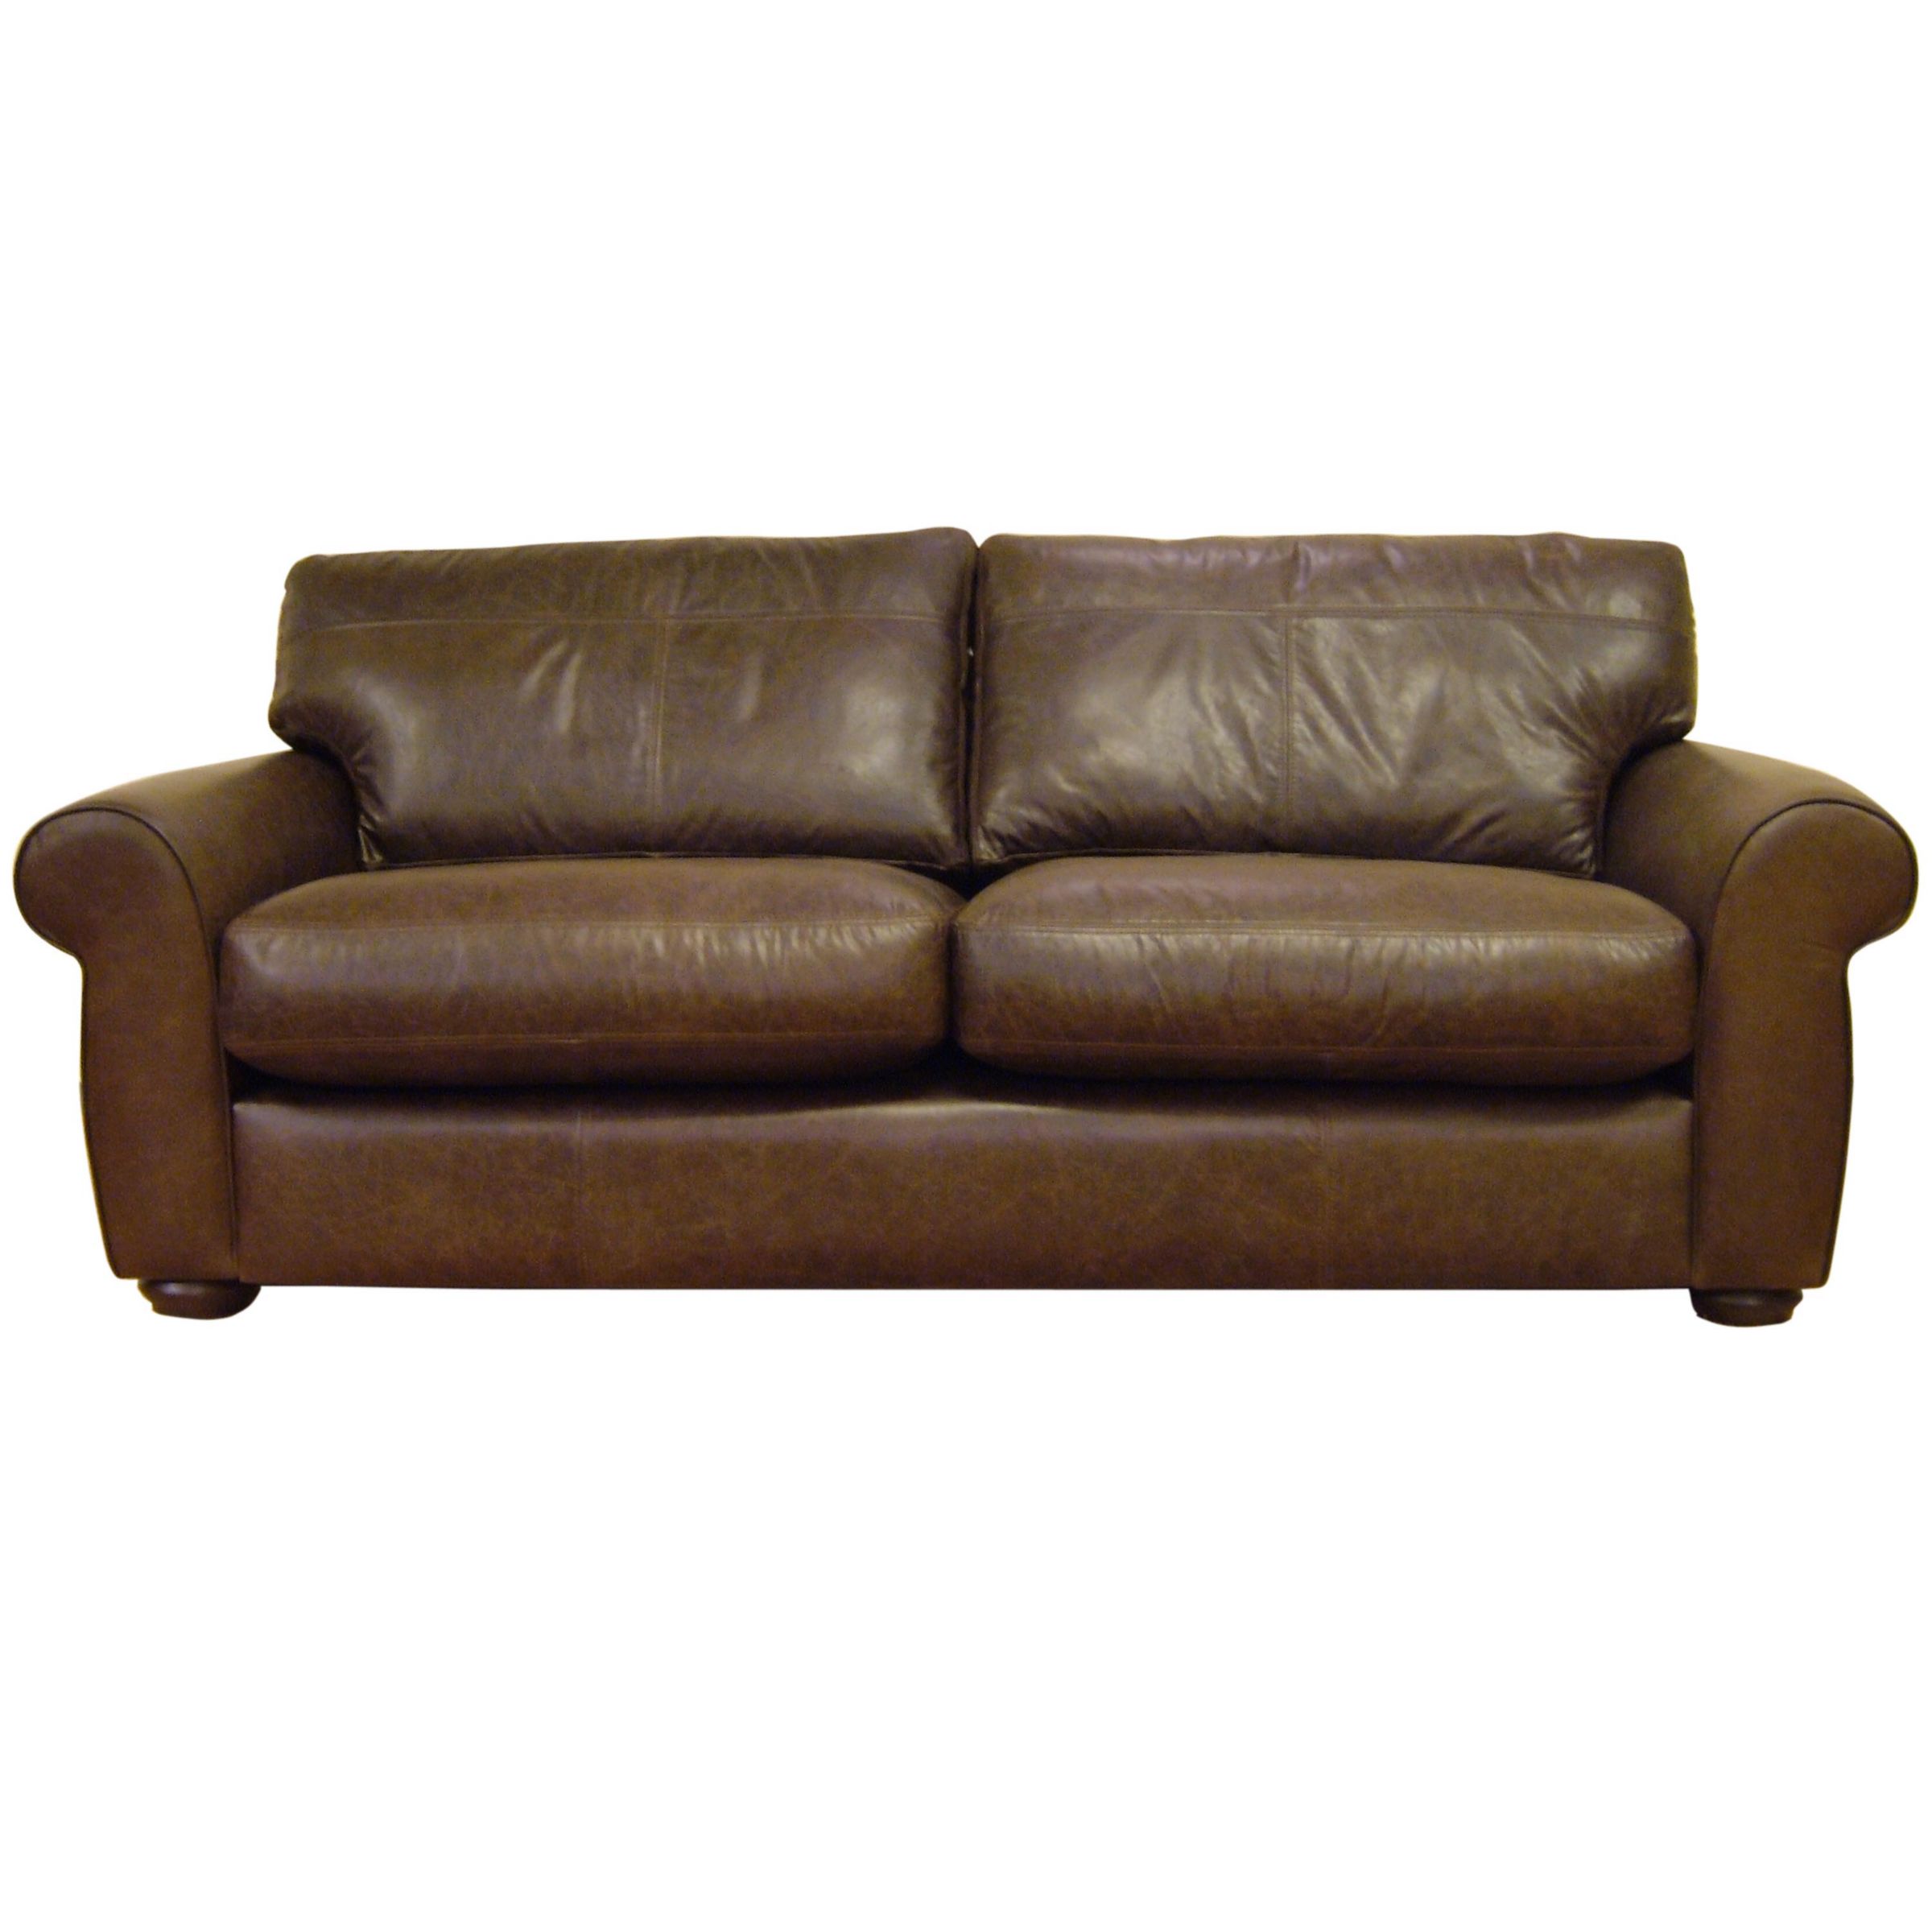 John Lewis Madison Small Cushion Back Leather Sofa at JohnLewis